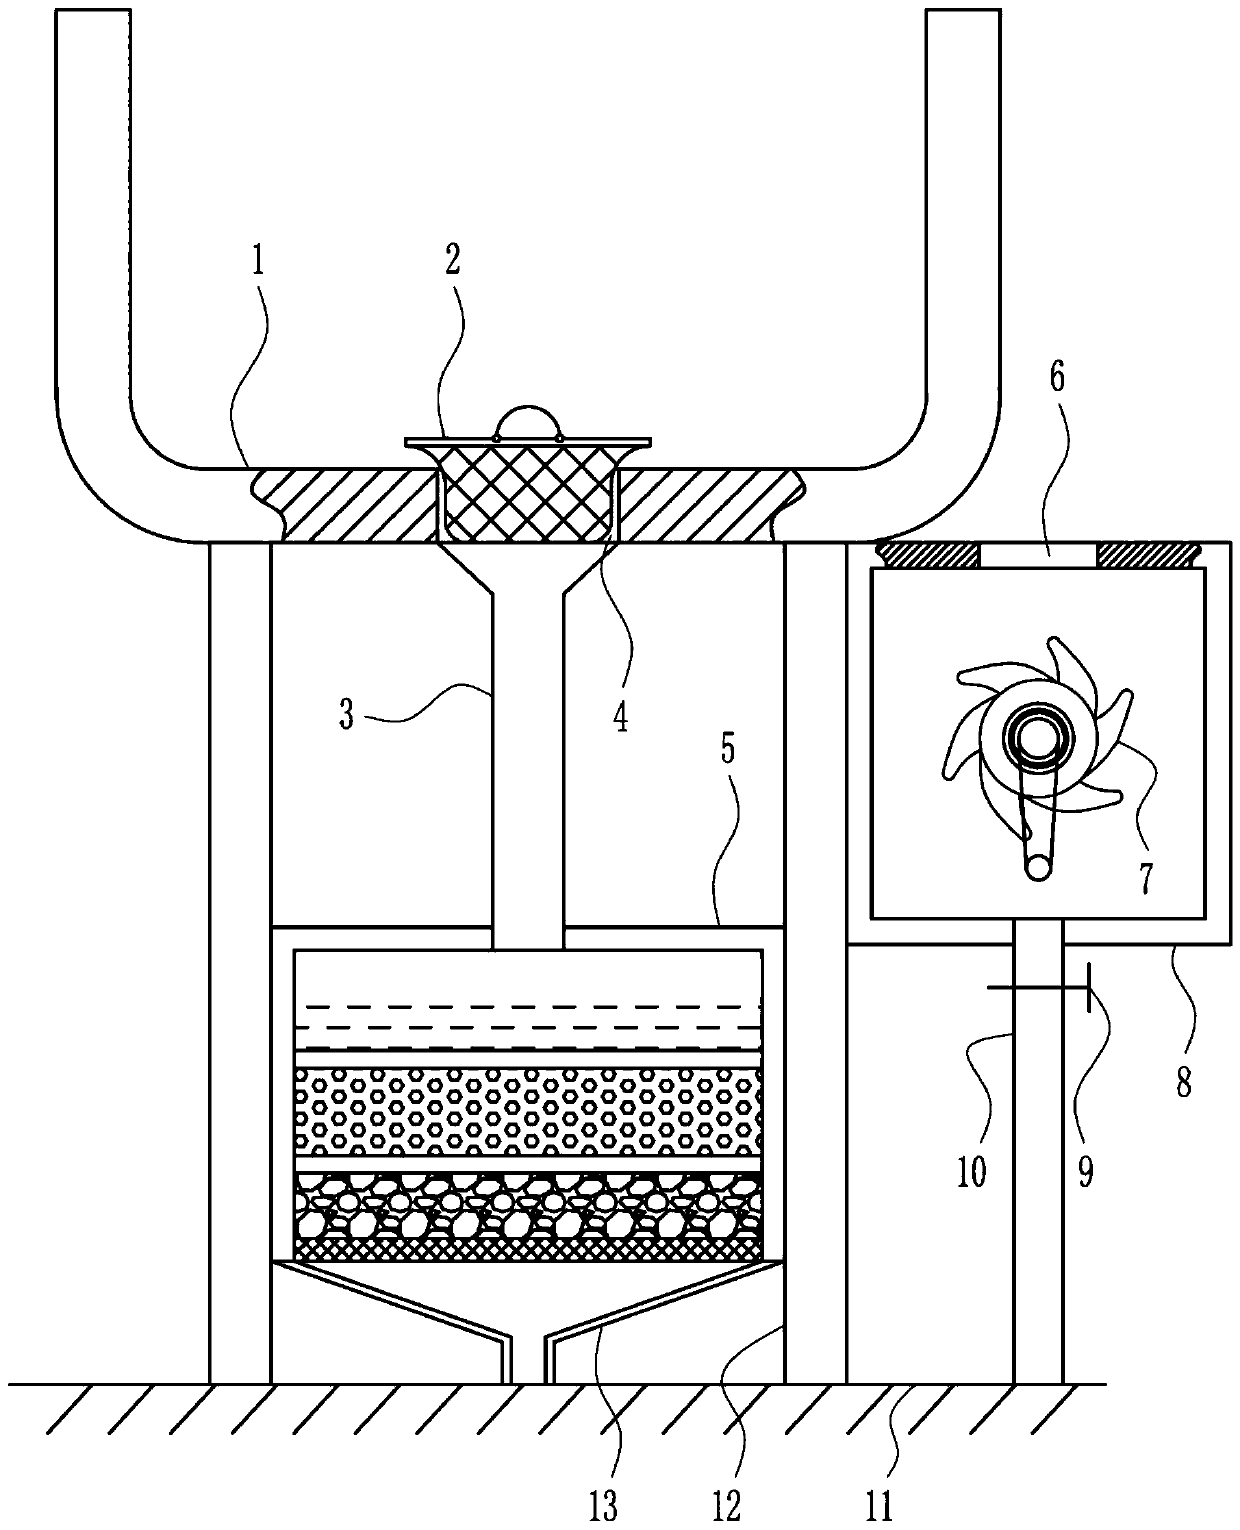 A kitchen domestic sewage treatment device